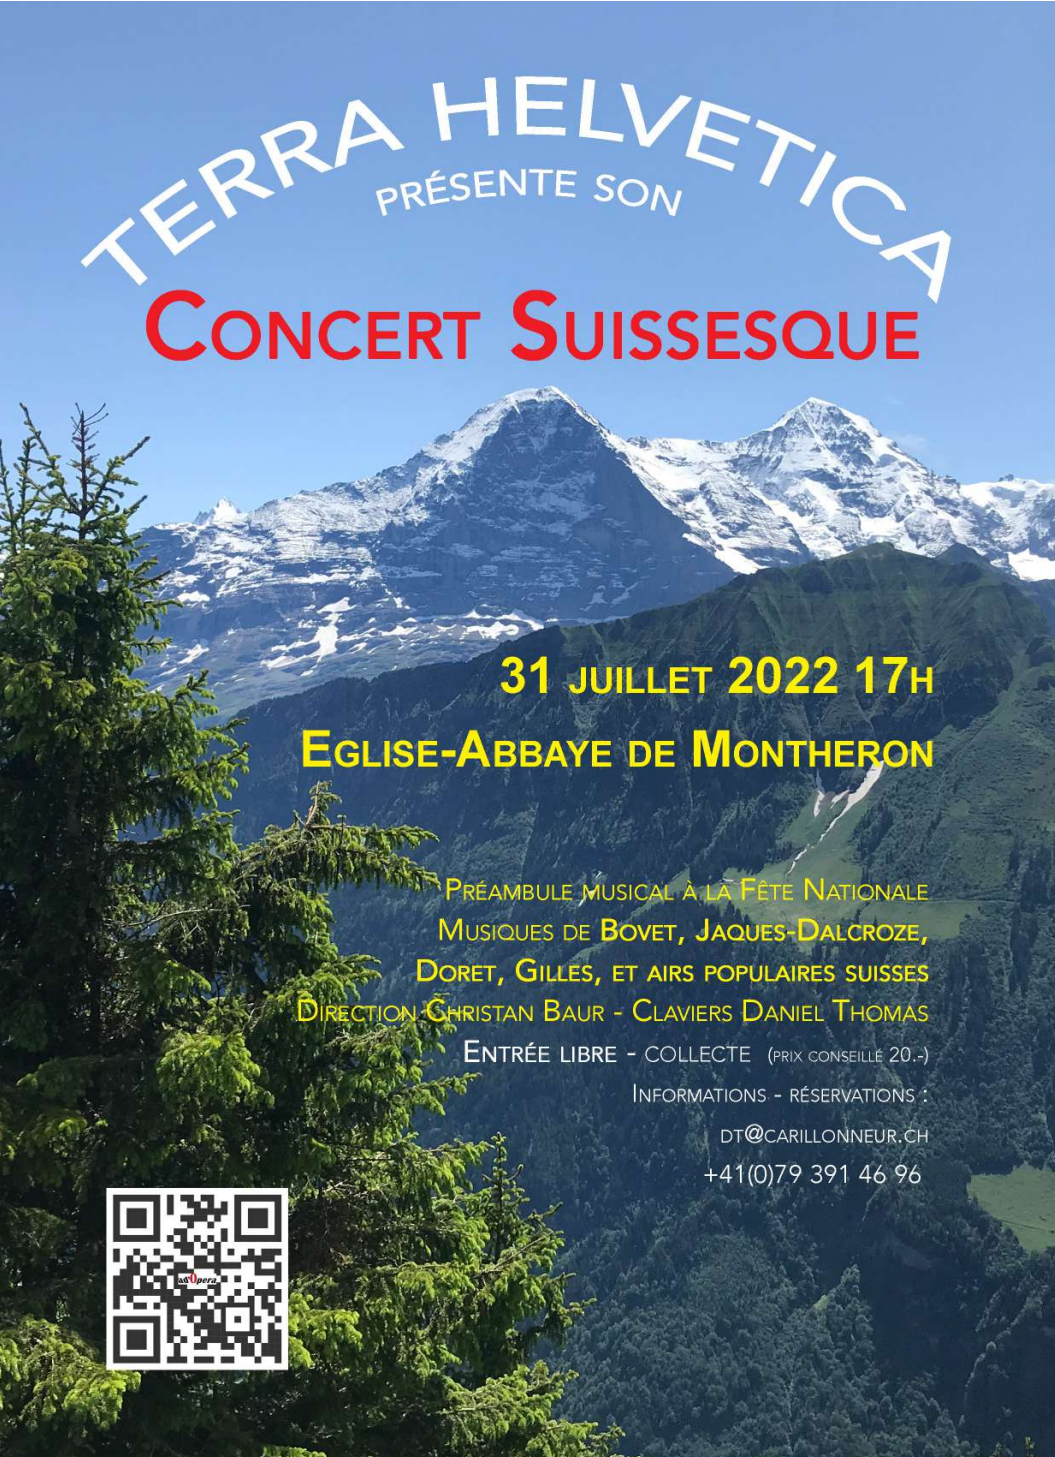 Concert Suissesque – par Terra Helvetica